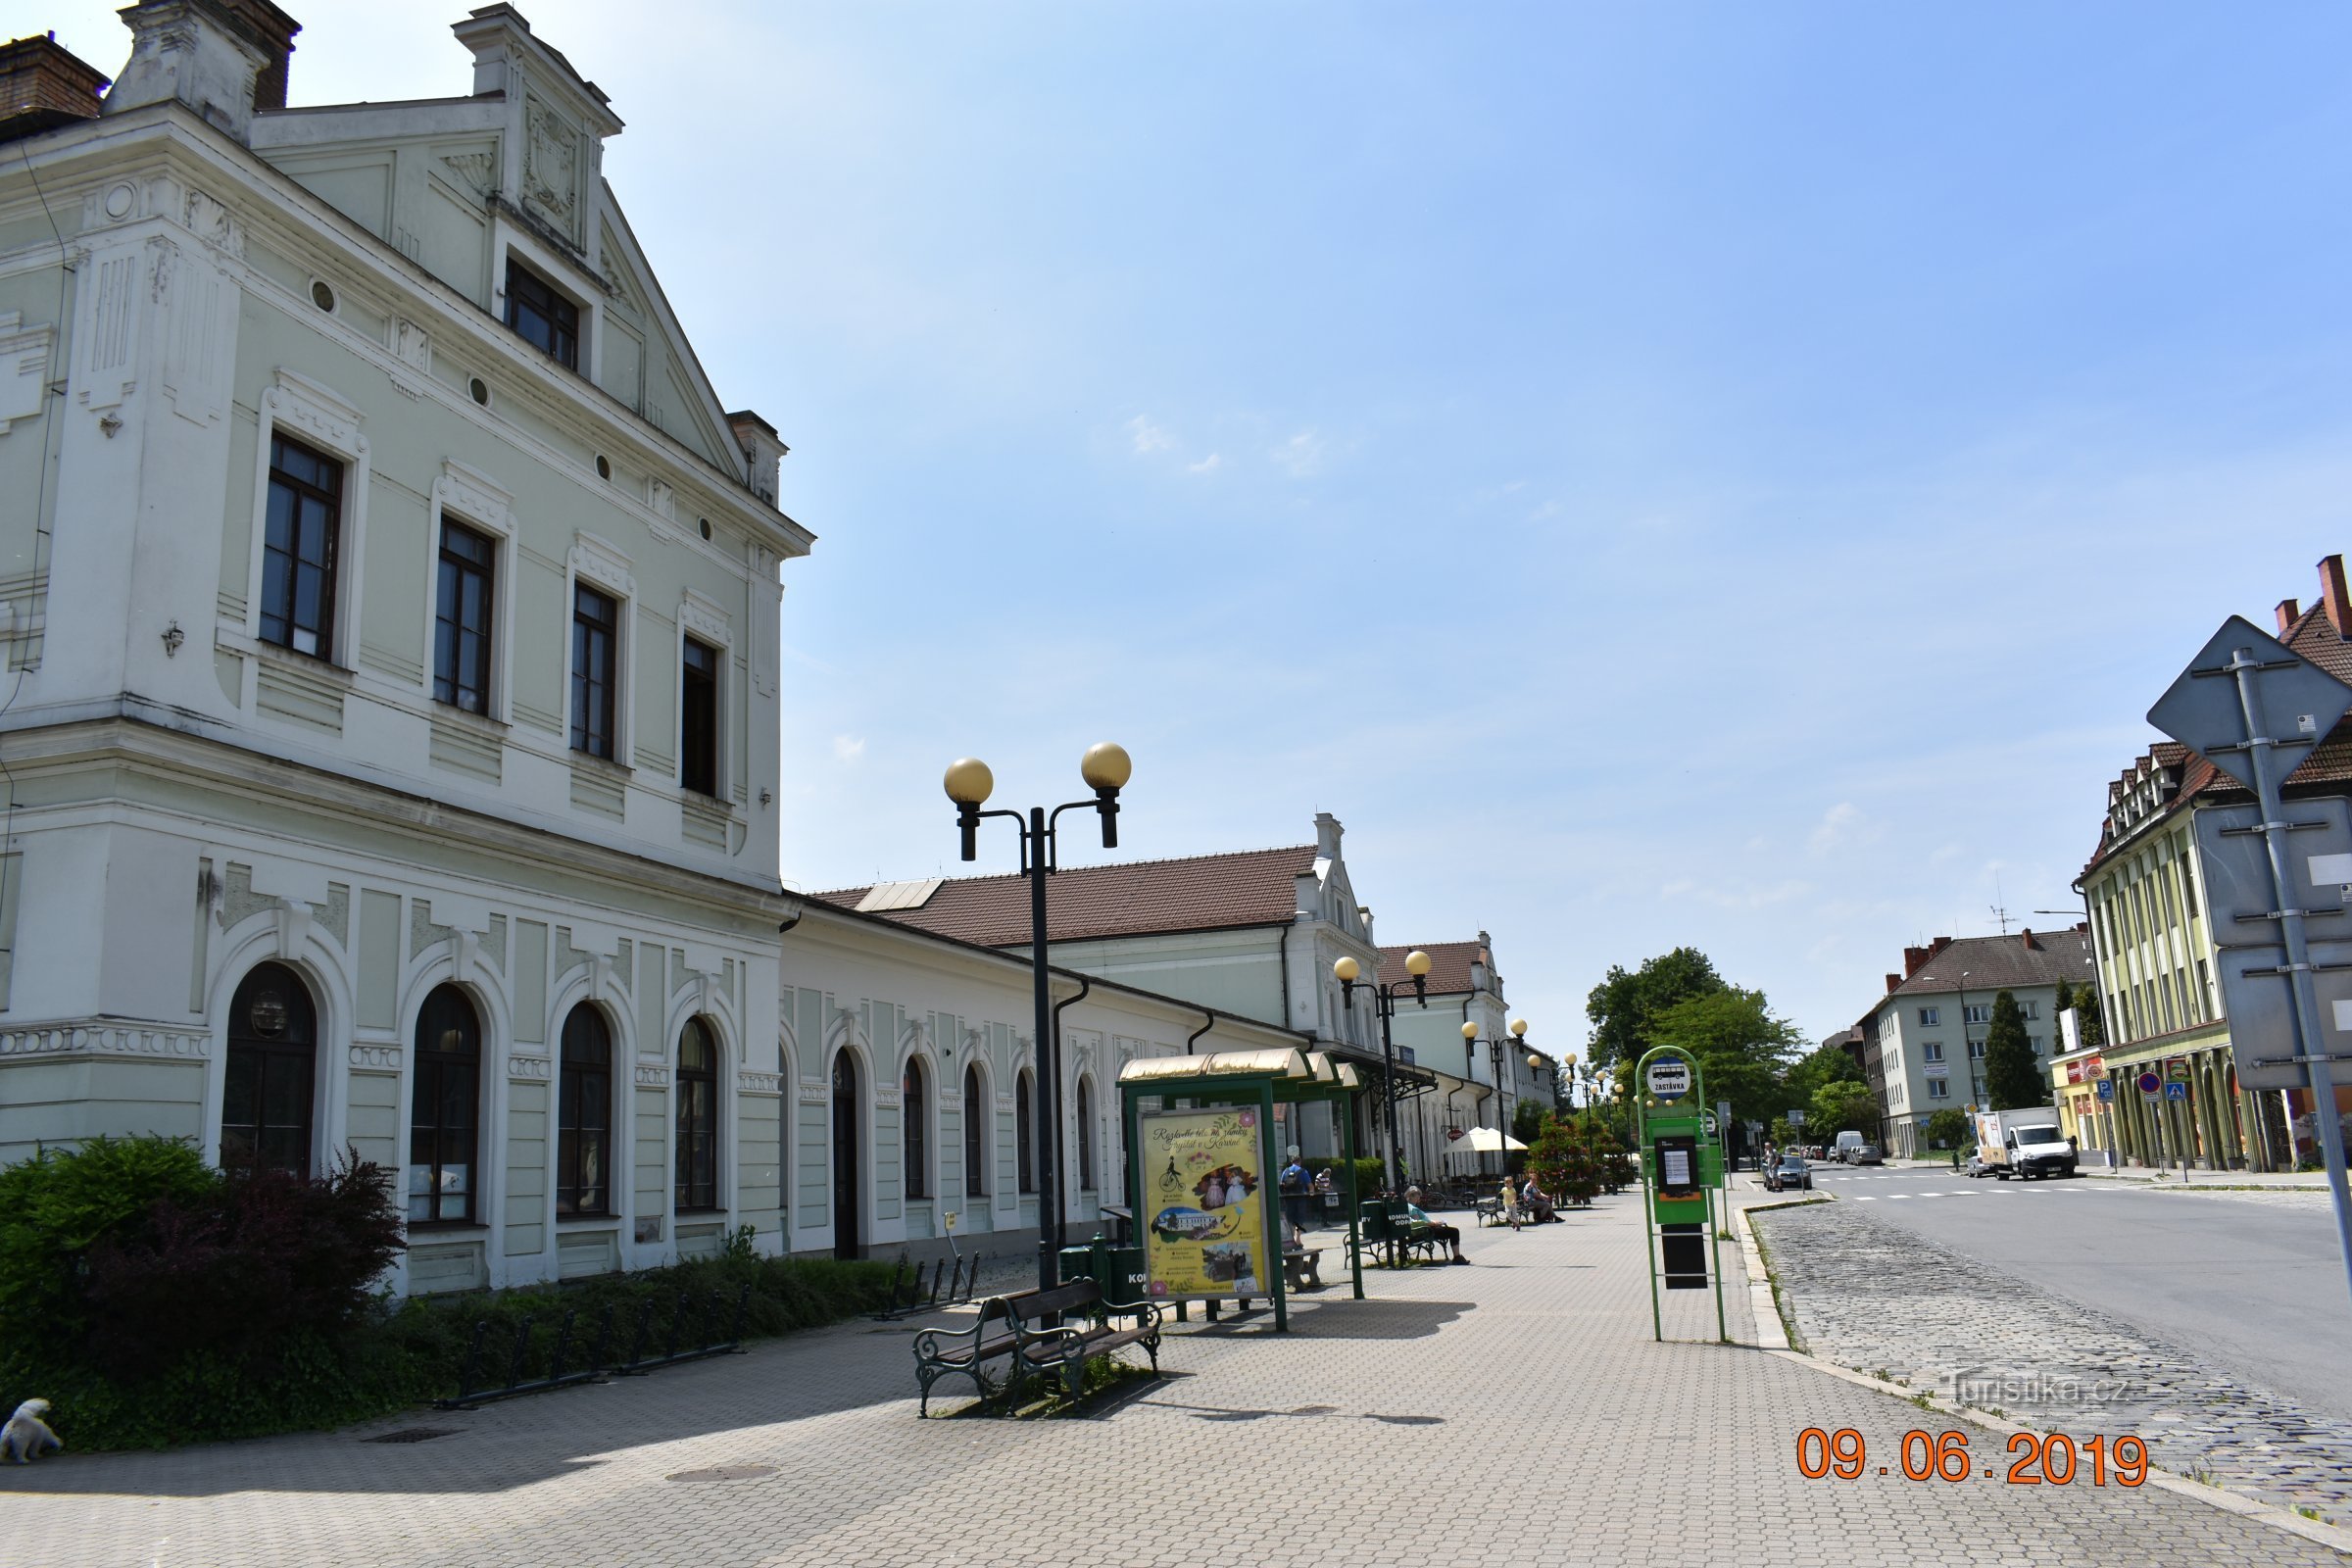 The dispatch building of the Bohumín railway station